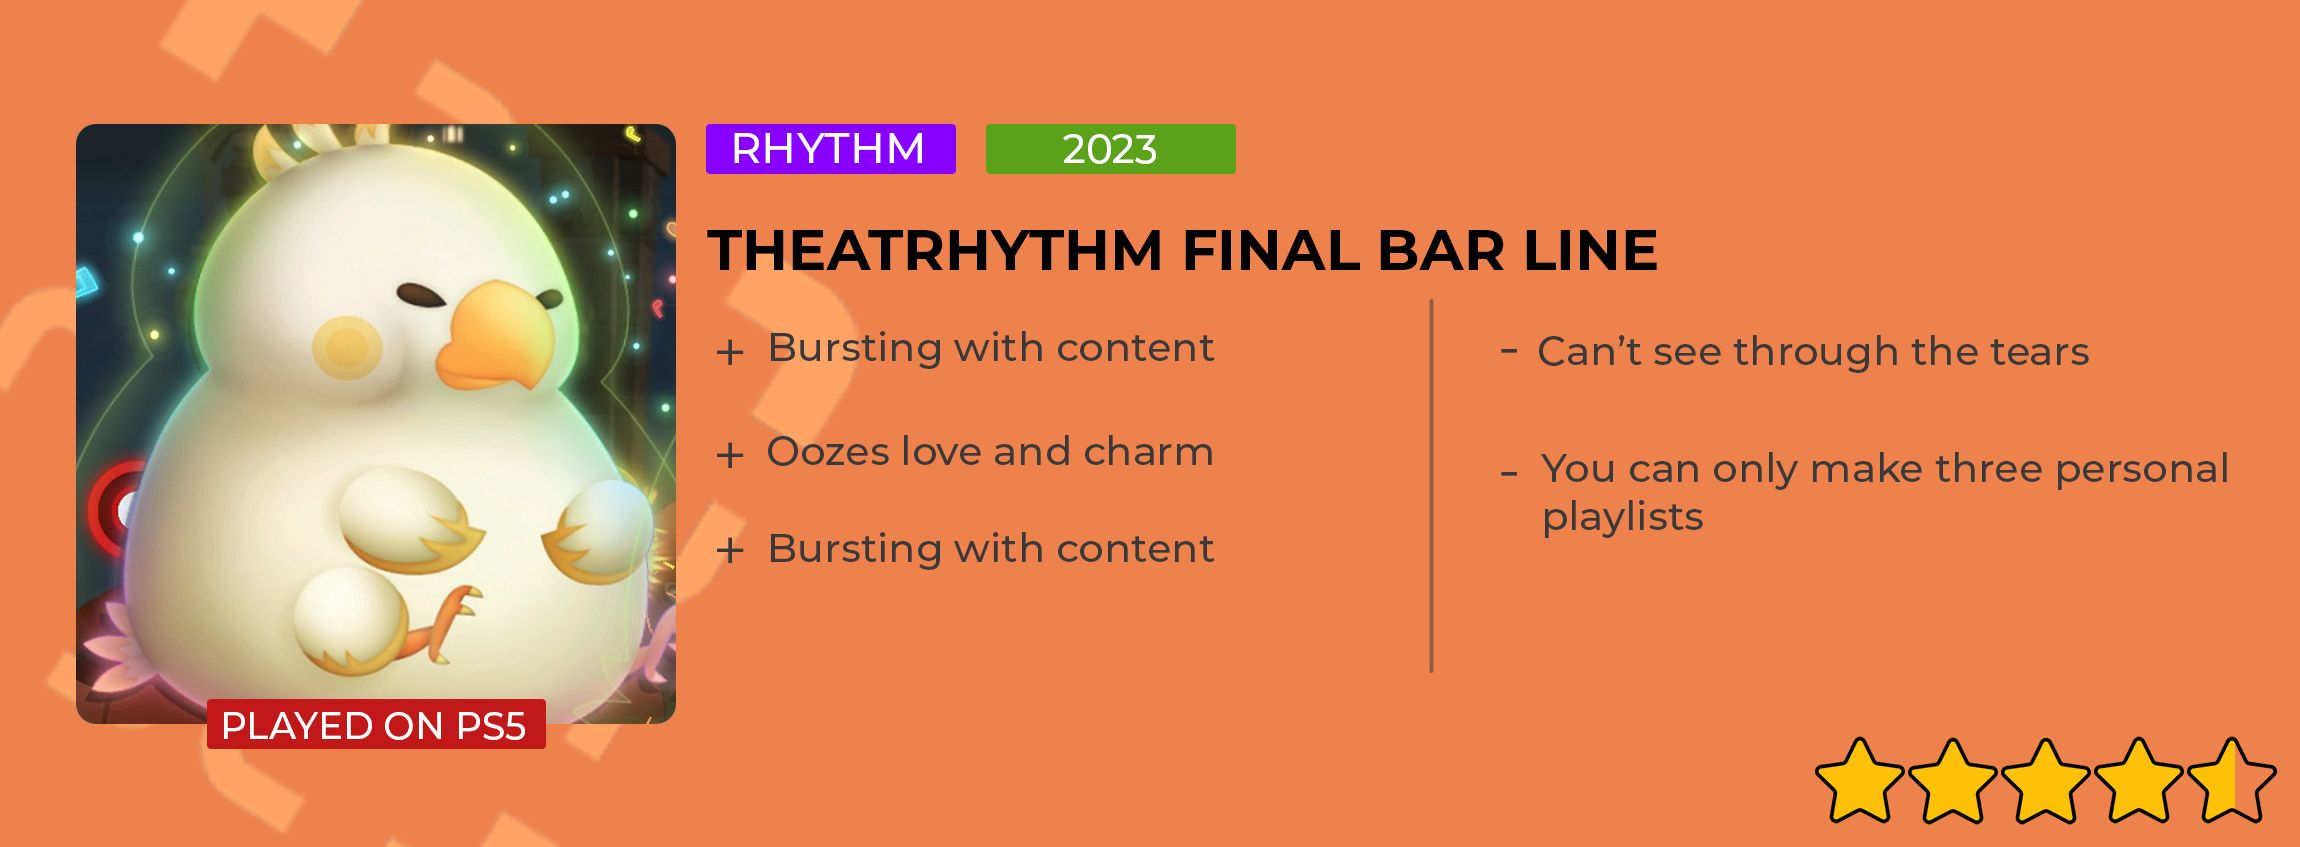 theatrhythm final bar line review card